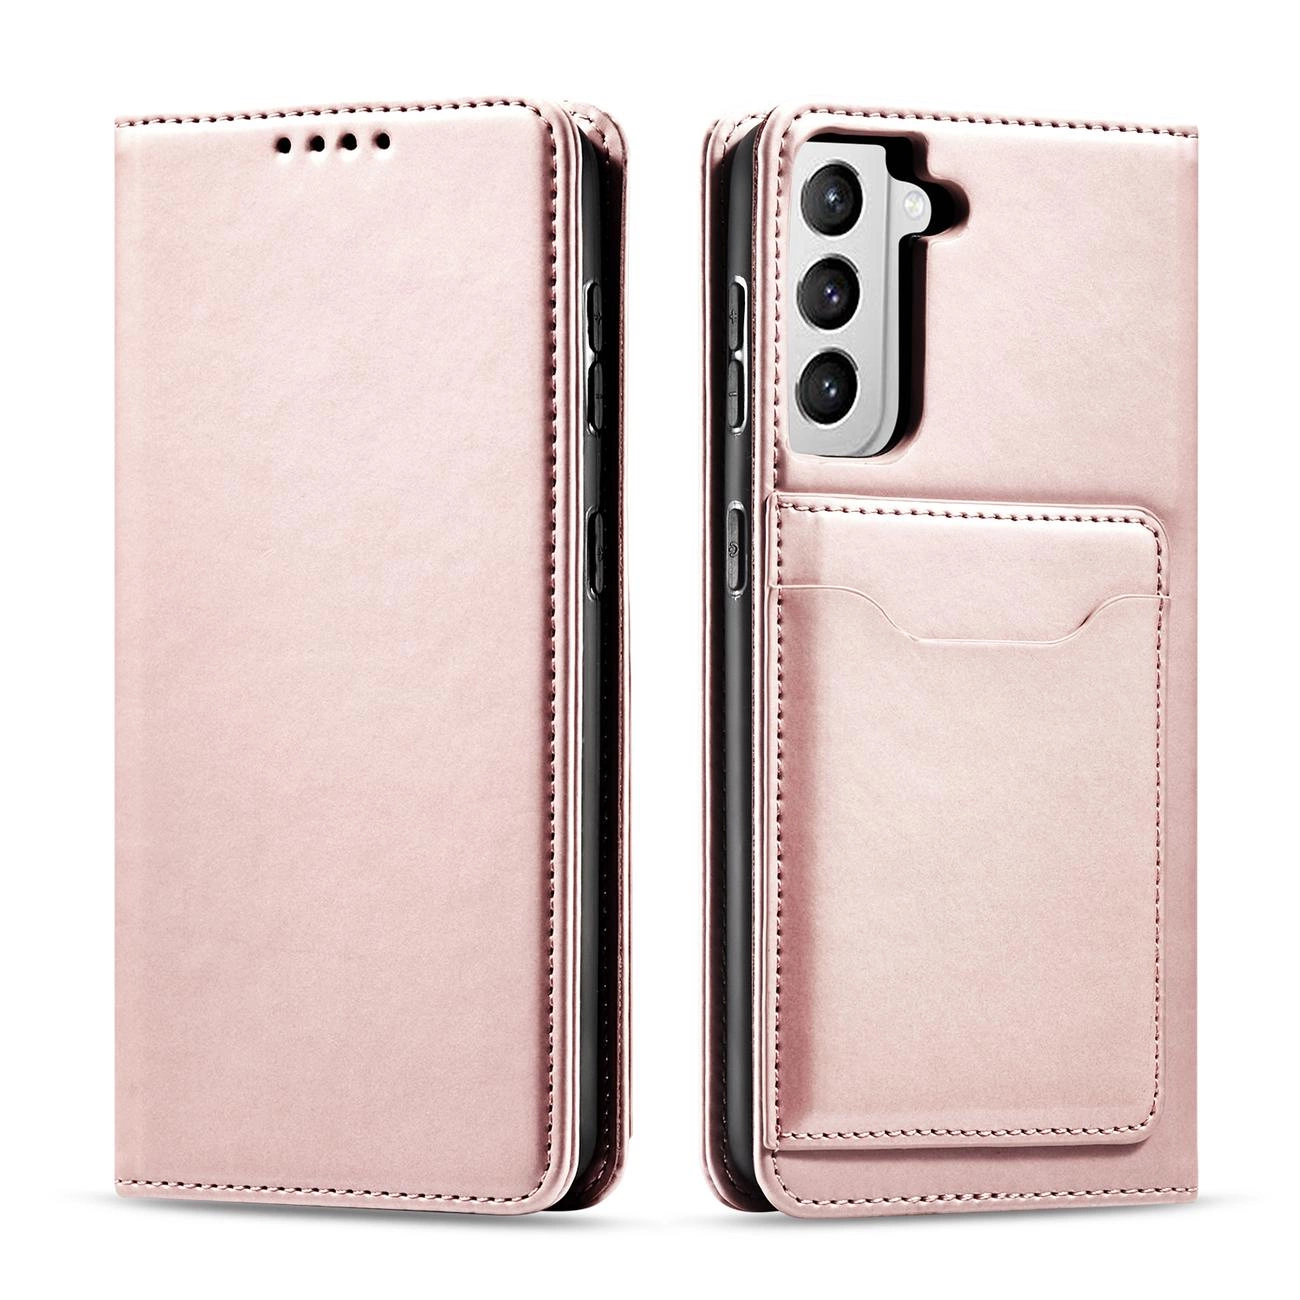 Hurtel Magnet Card Case pro Samsung Galaxy S22 card wallet cover card holder pink